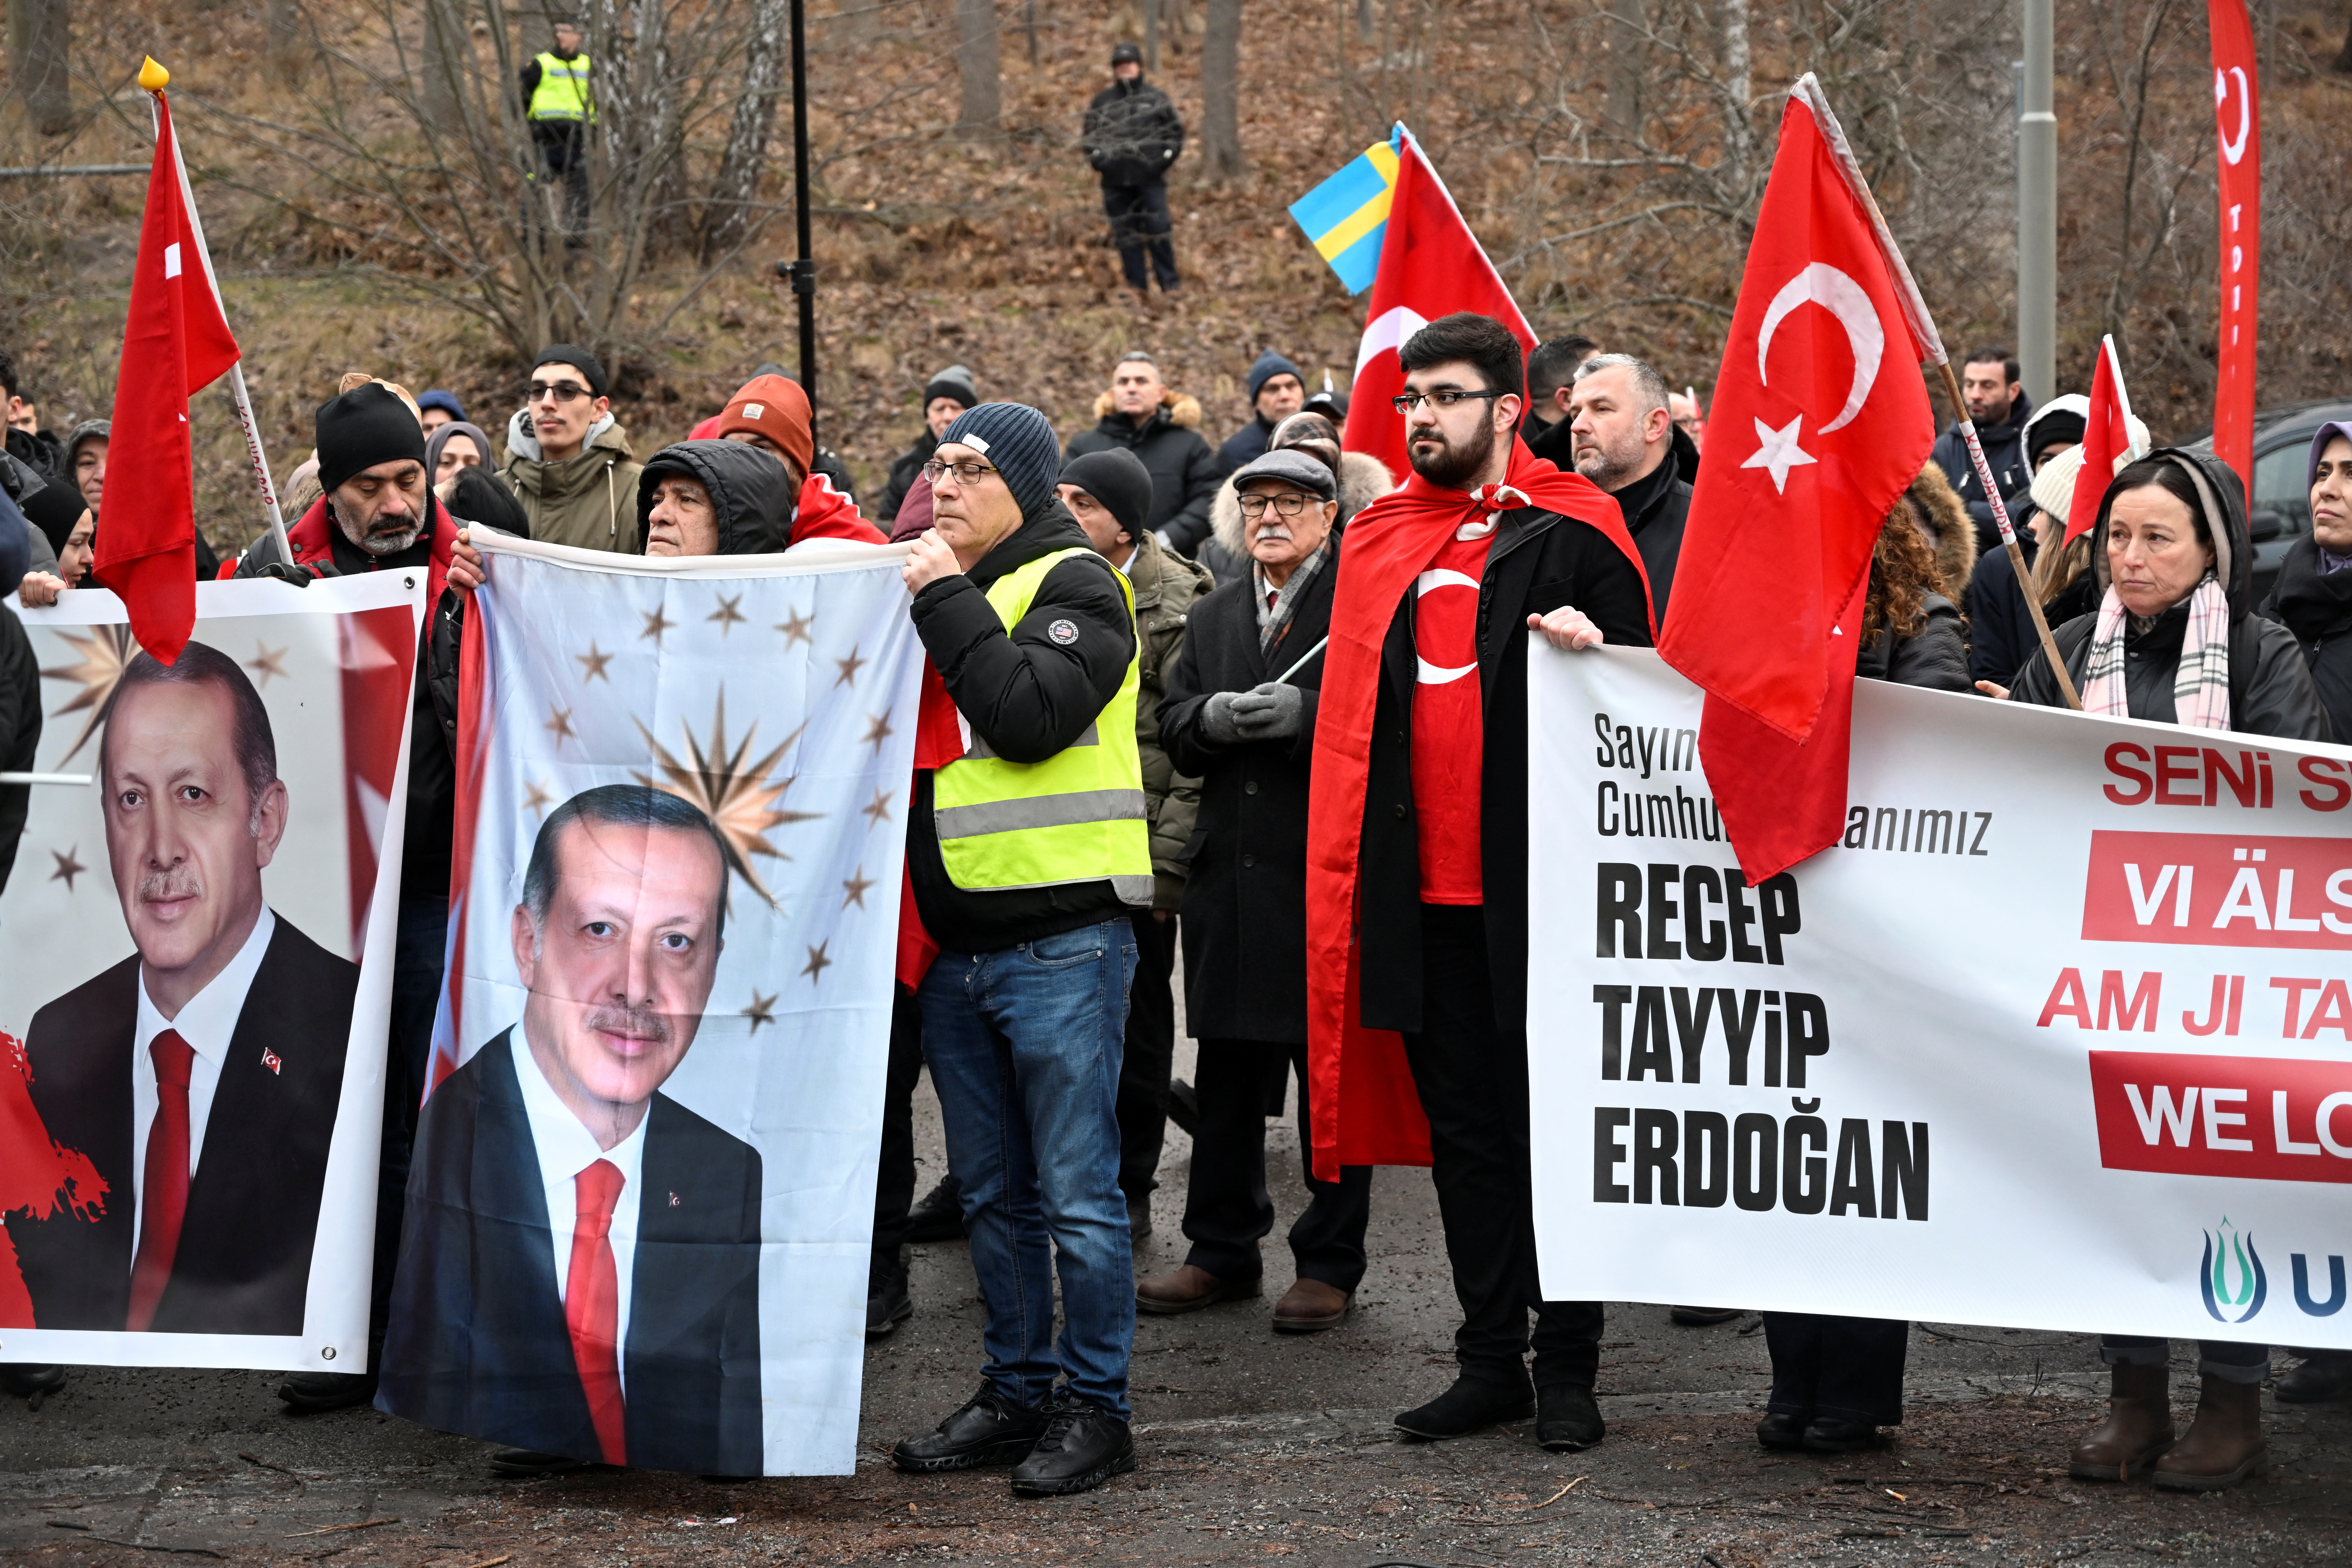 Members of pro-Turkish organization UETD demonstrate in Stockholm